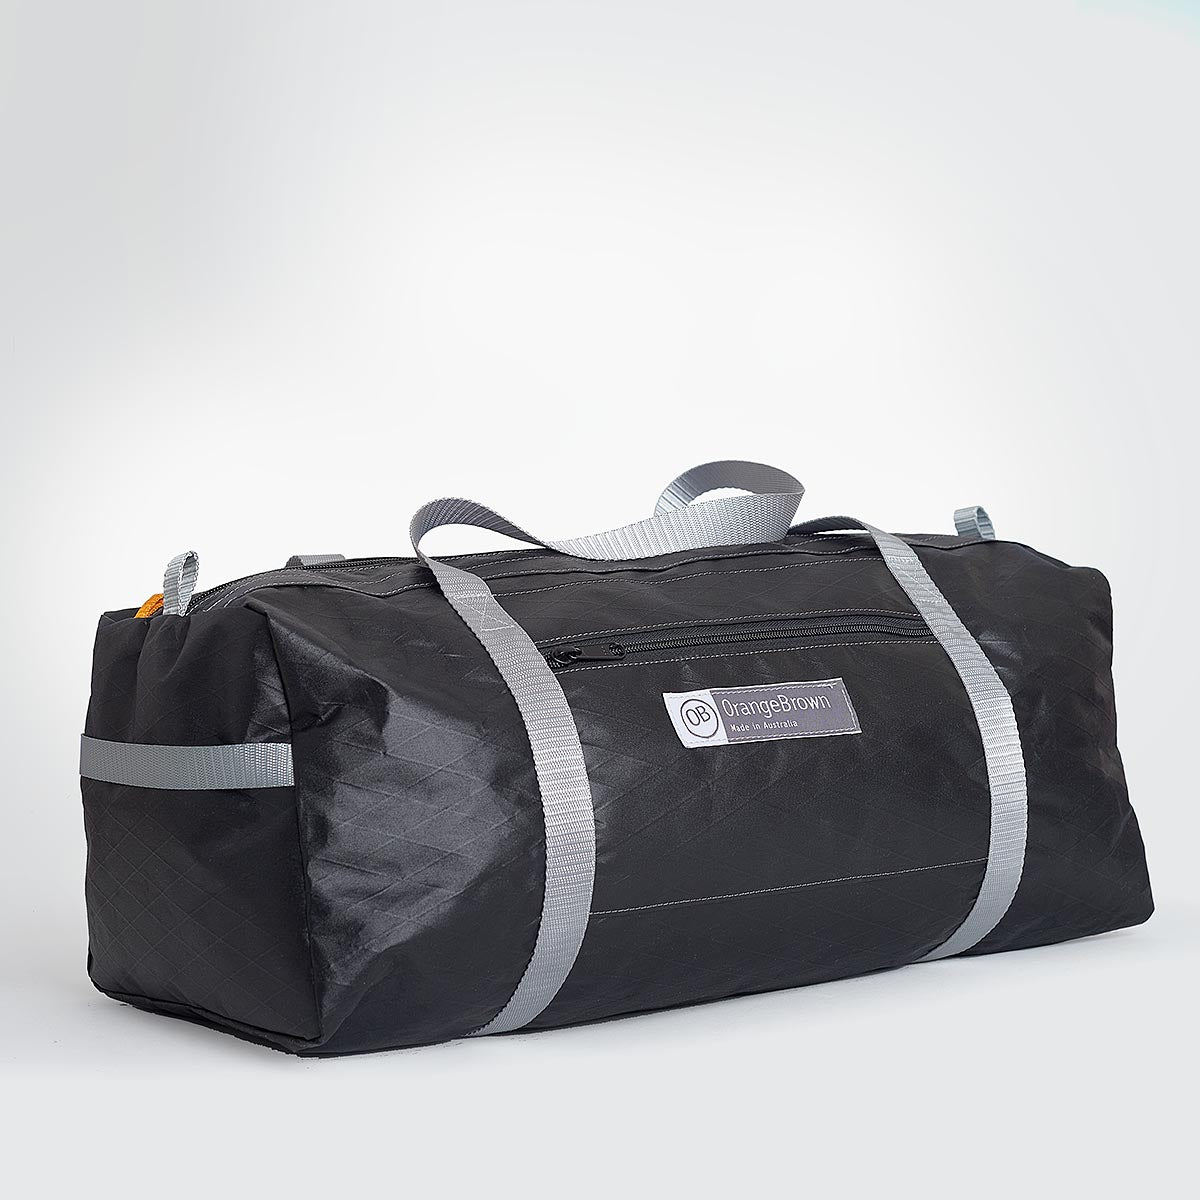 Australian made super lightweight Travel Bag in colour black.